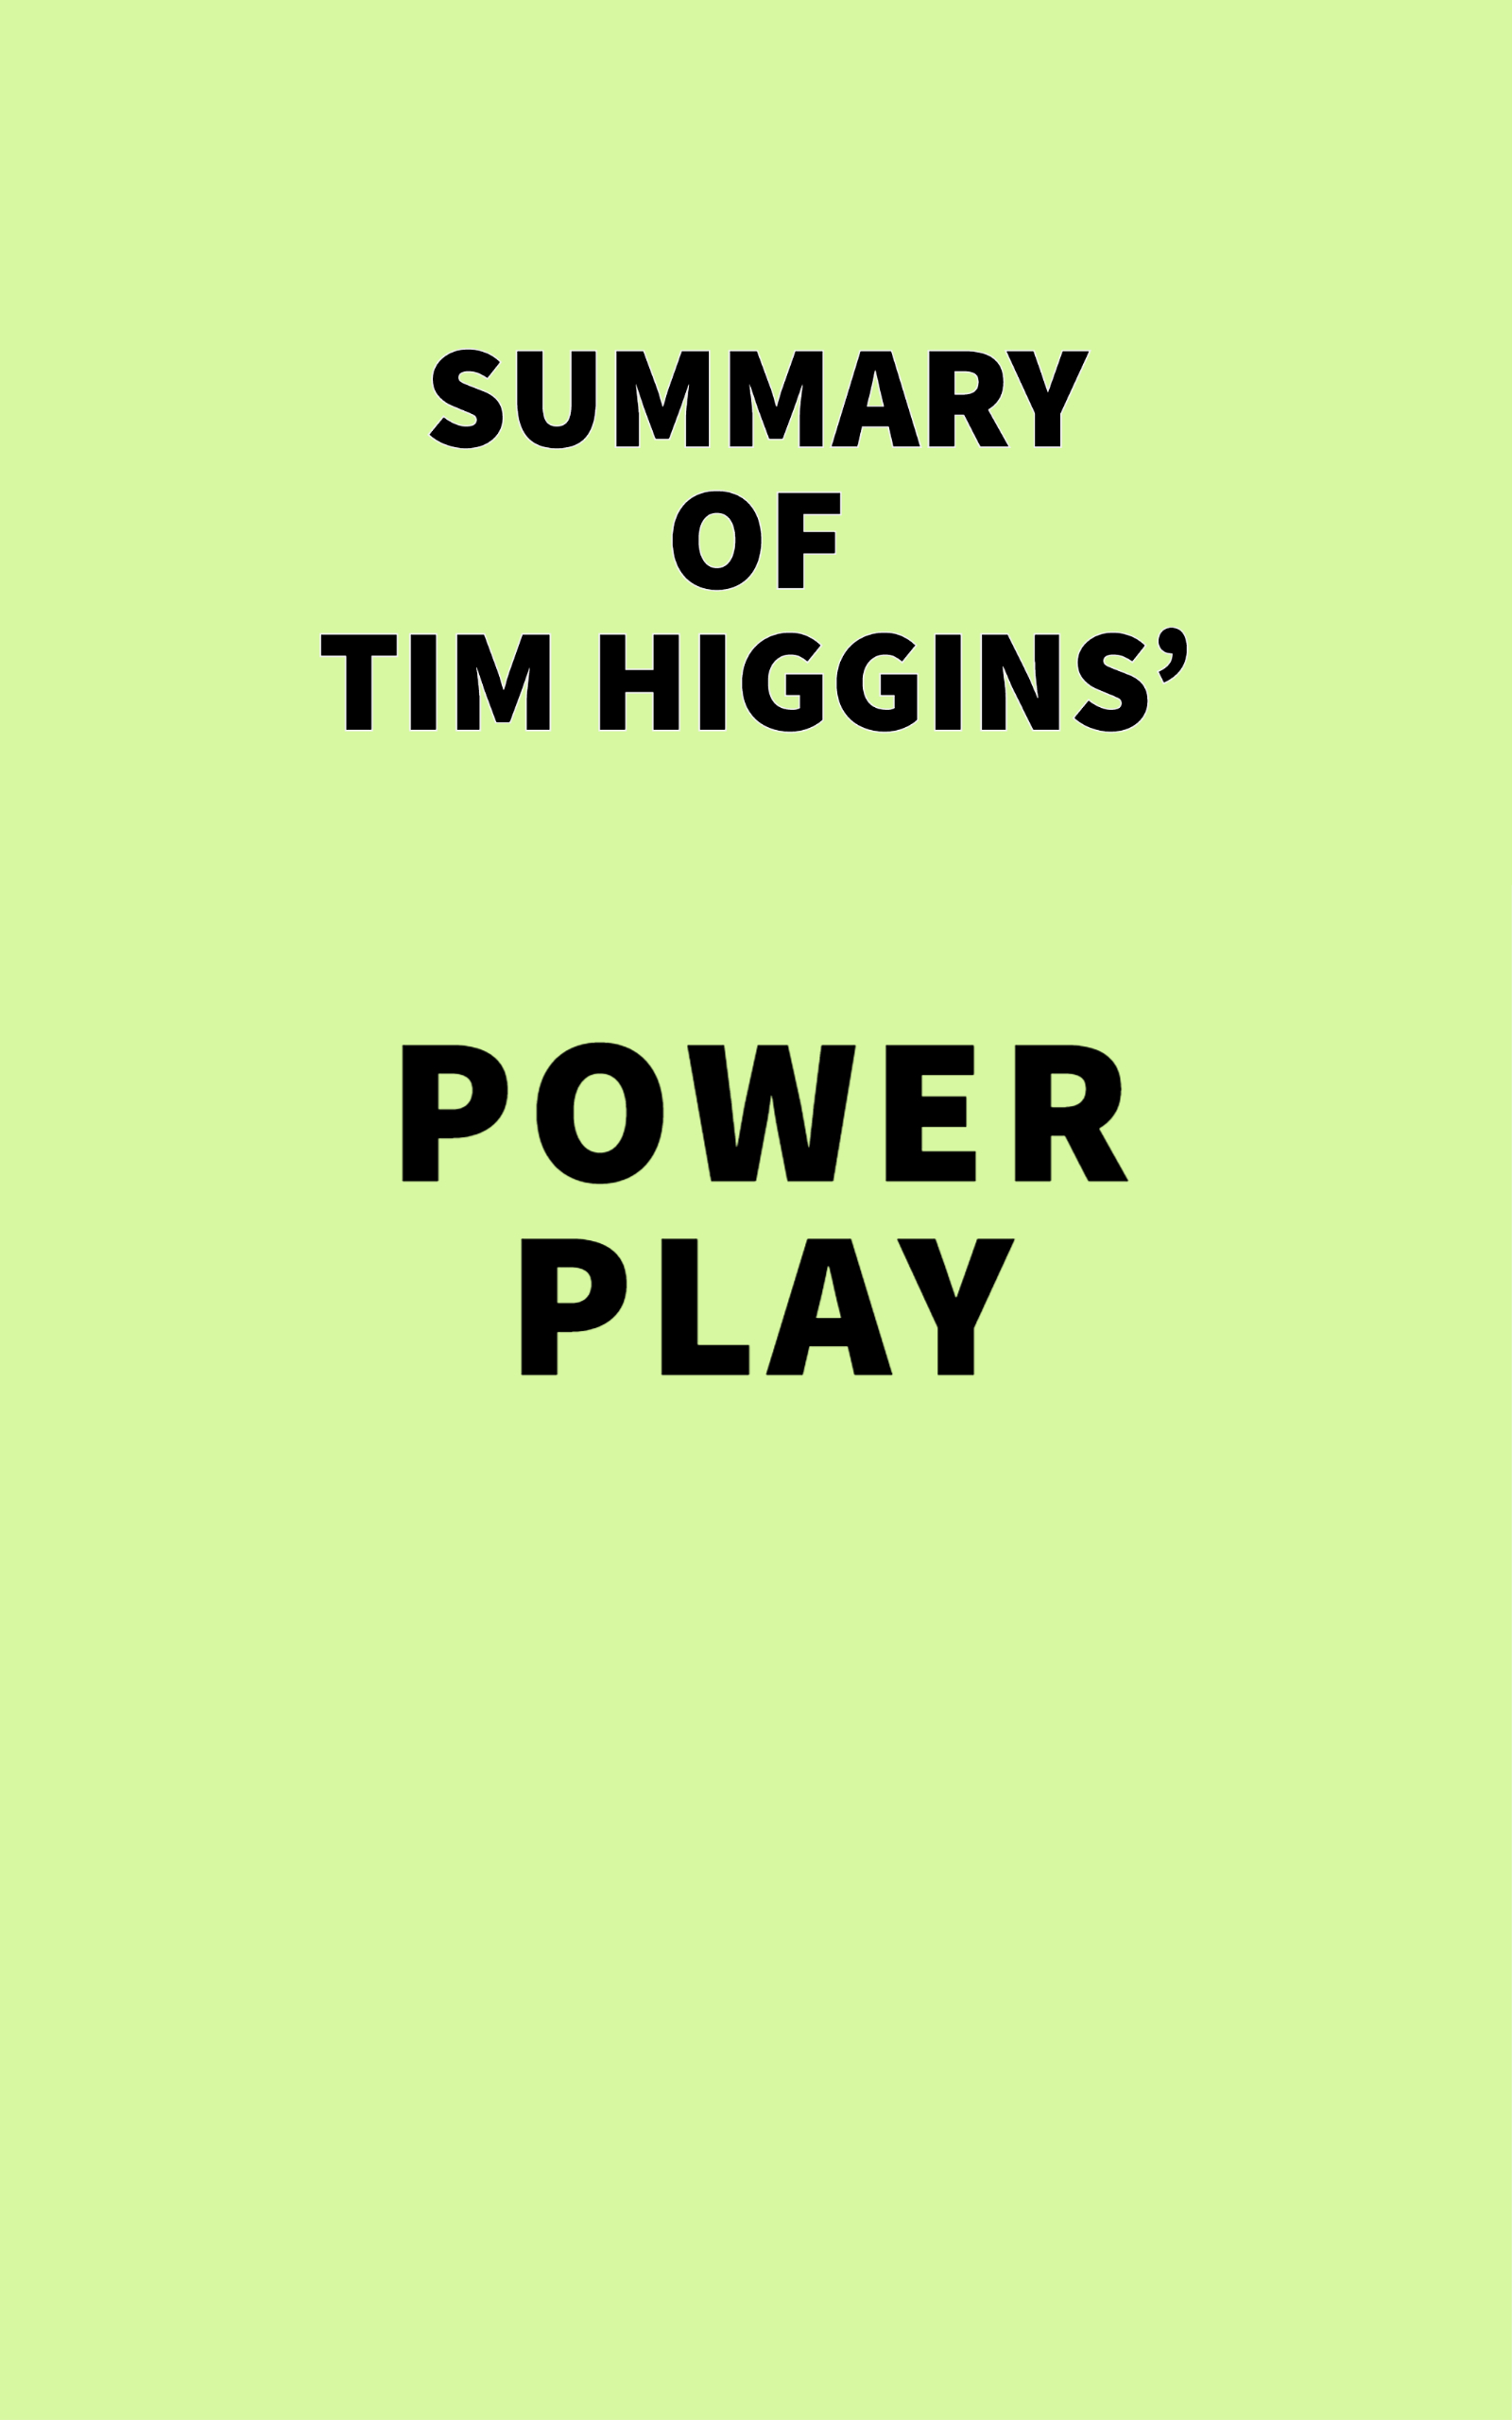 Summary of Tim Higgins' Power Play